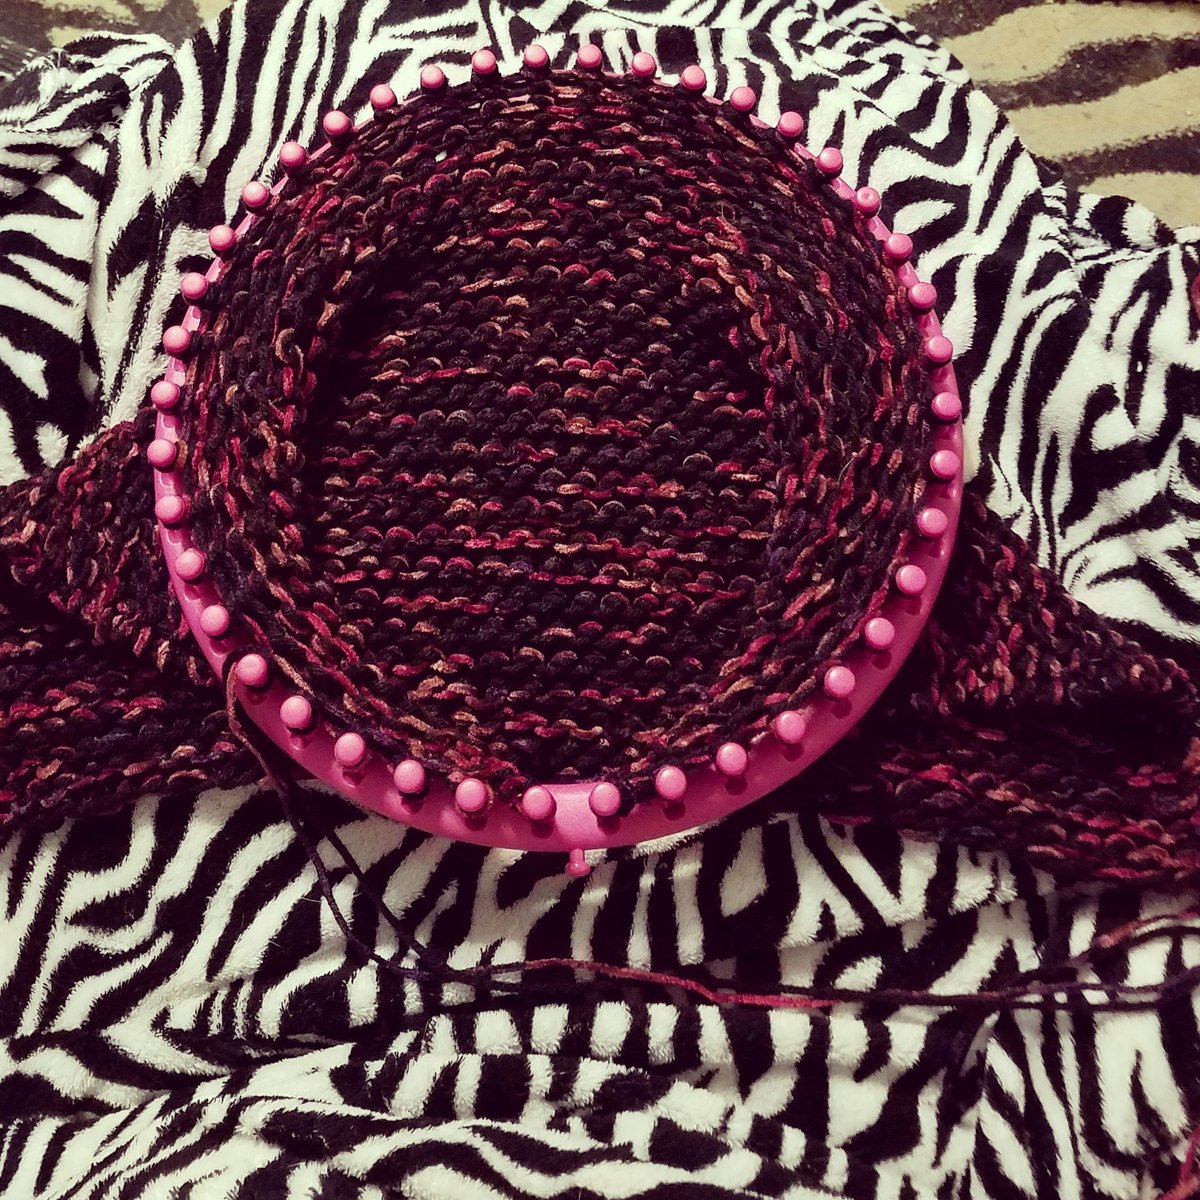 My current project! Making my first knit shawl! Think cozy winter accessory. #knittingaddict #knittersofinstagram #knitting #knittingloom #knitter #crafty #creative #craftfair #hobby #creativehobby #positivehobbies #creatives #create #yarn #yarncrafts #fallprojects #cozy #shawl